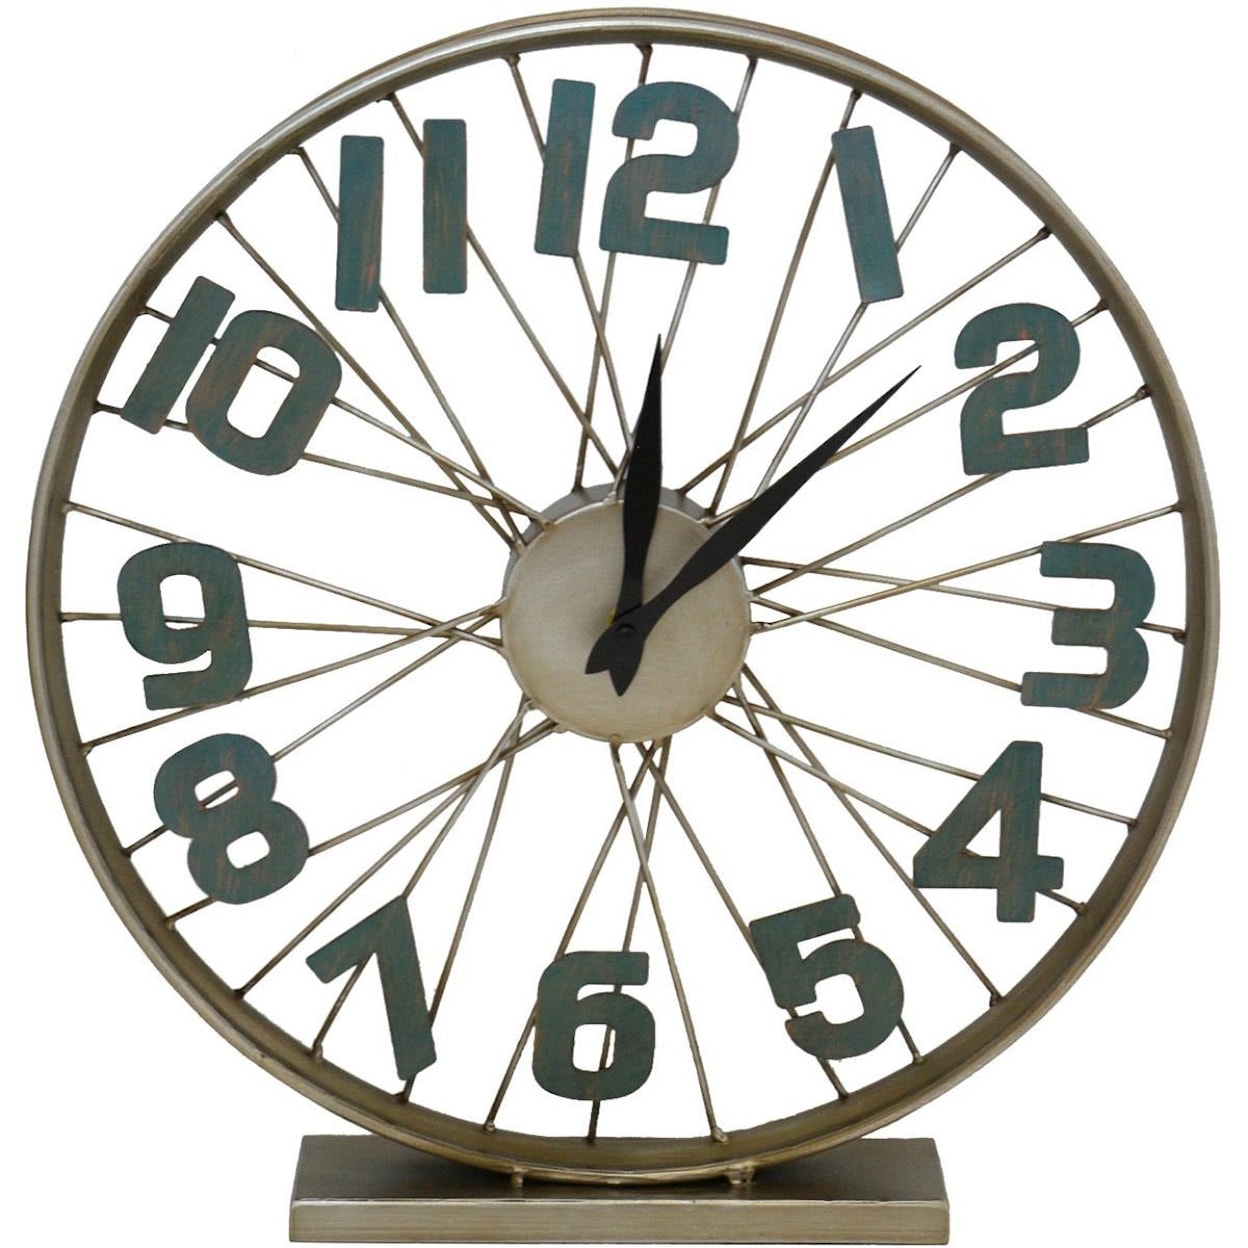 Crestview Collection Clocks Spoken Time Clock